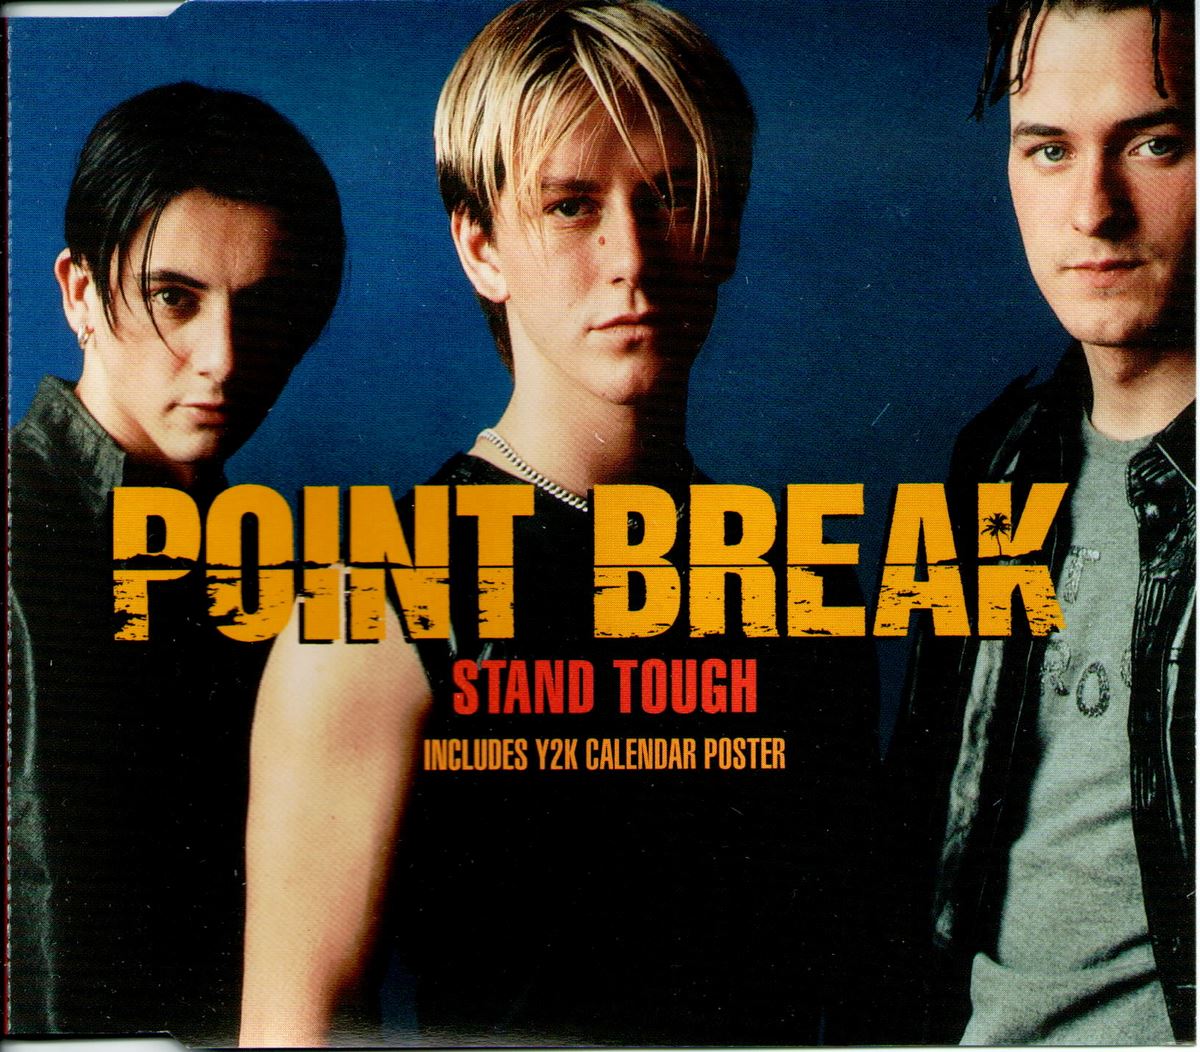 Broken stands. Point Break группа. Брейк Пойнт. Point Break CD. Rigid point.